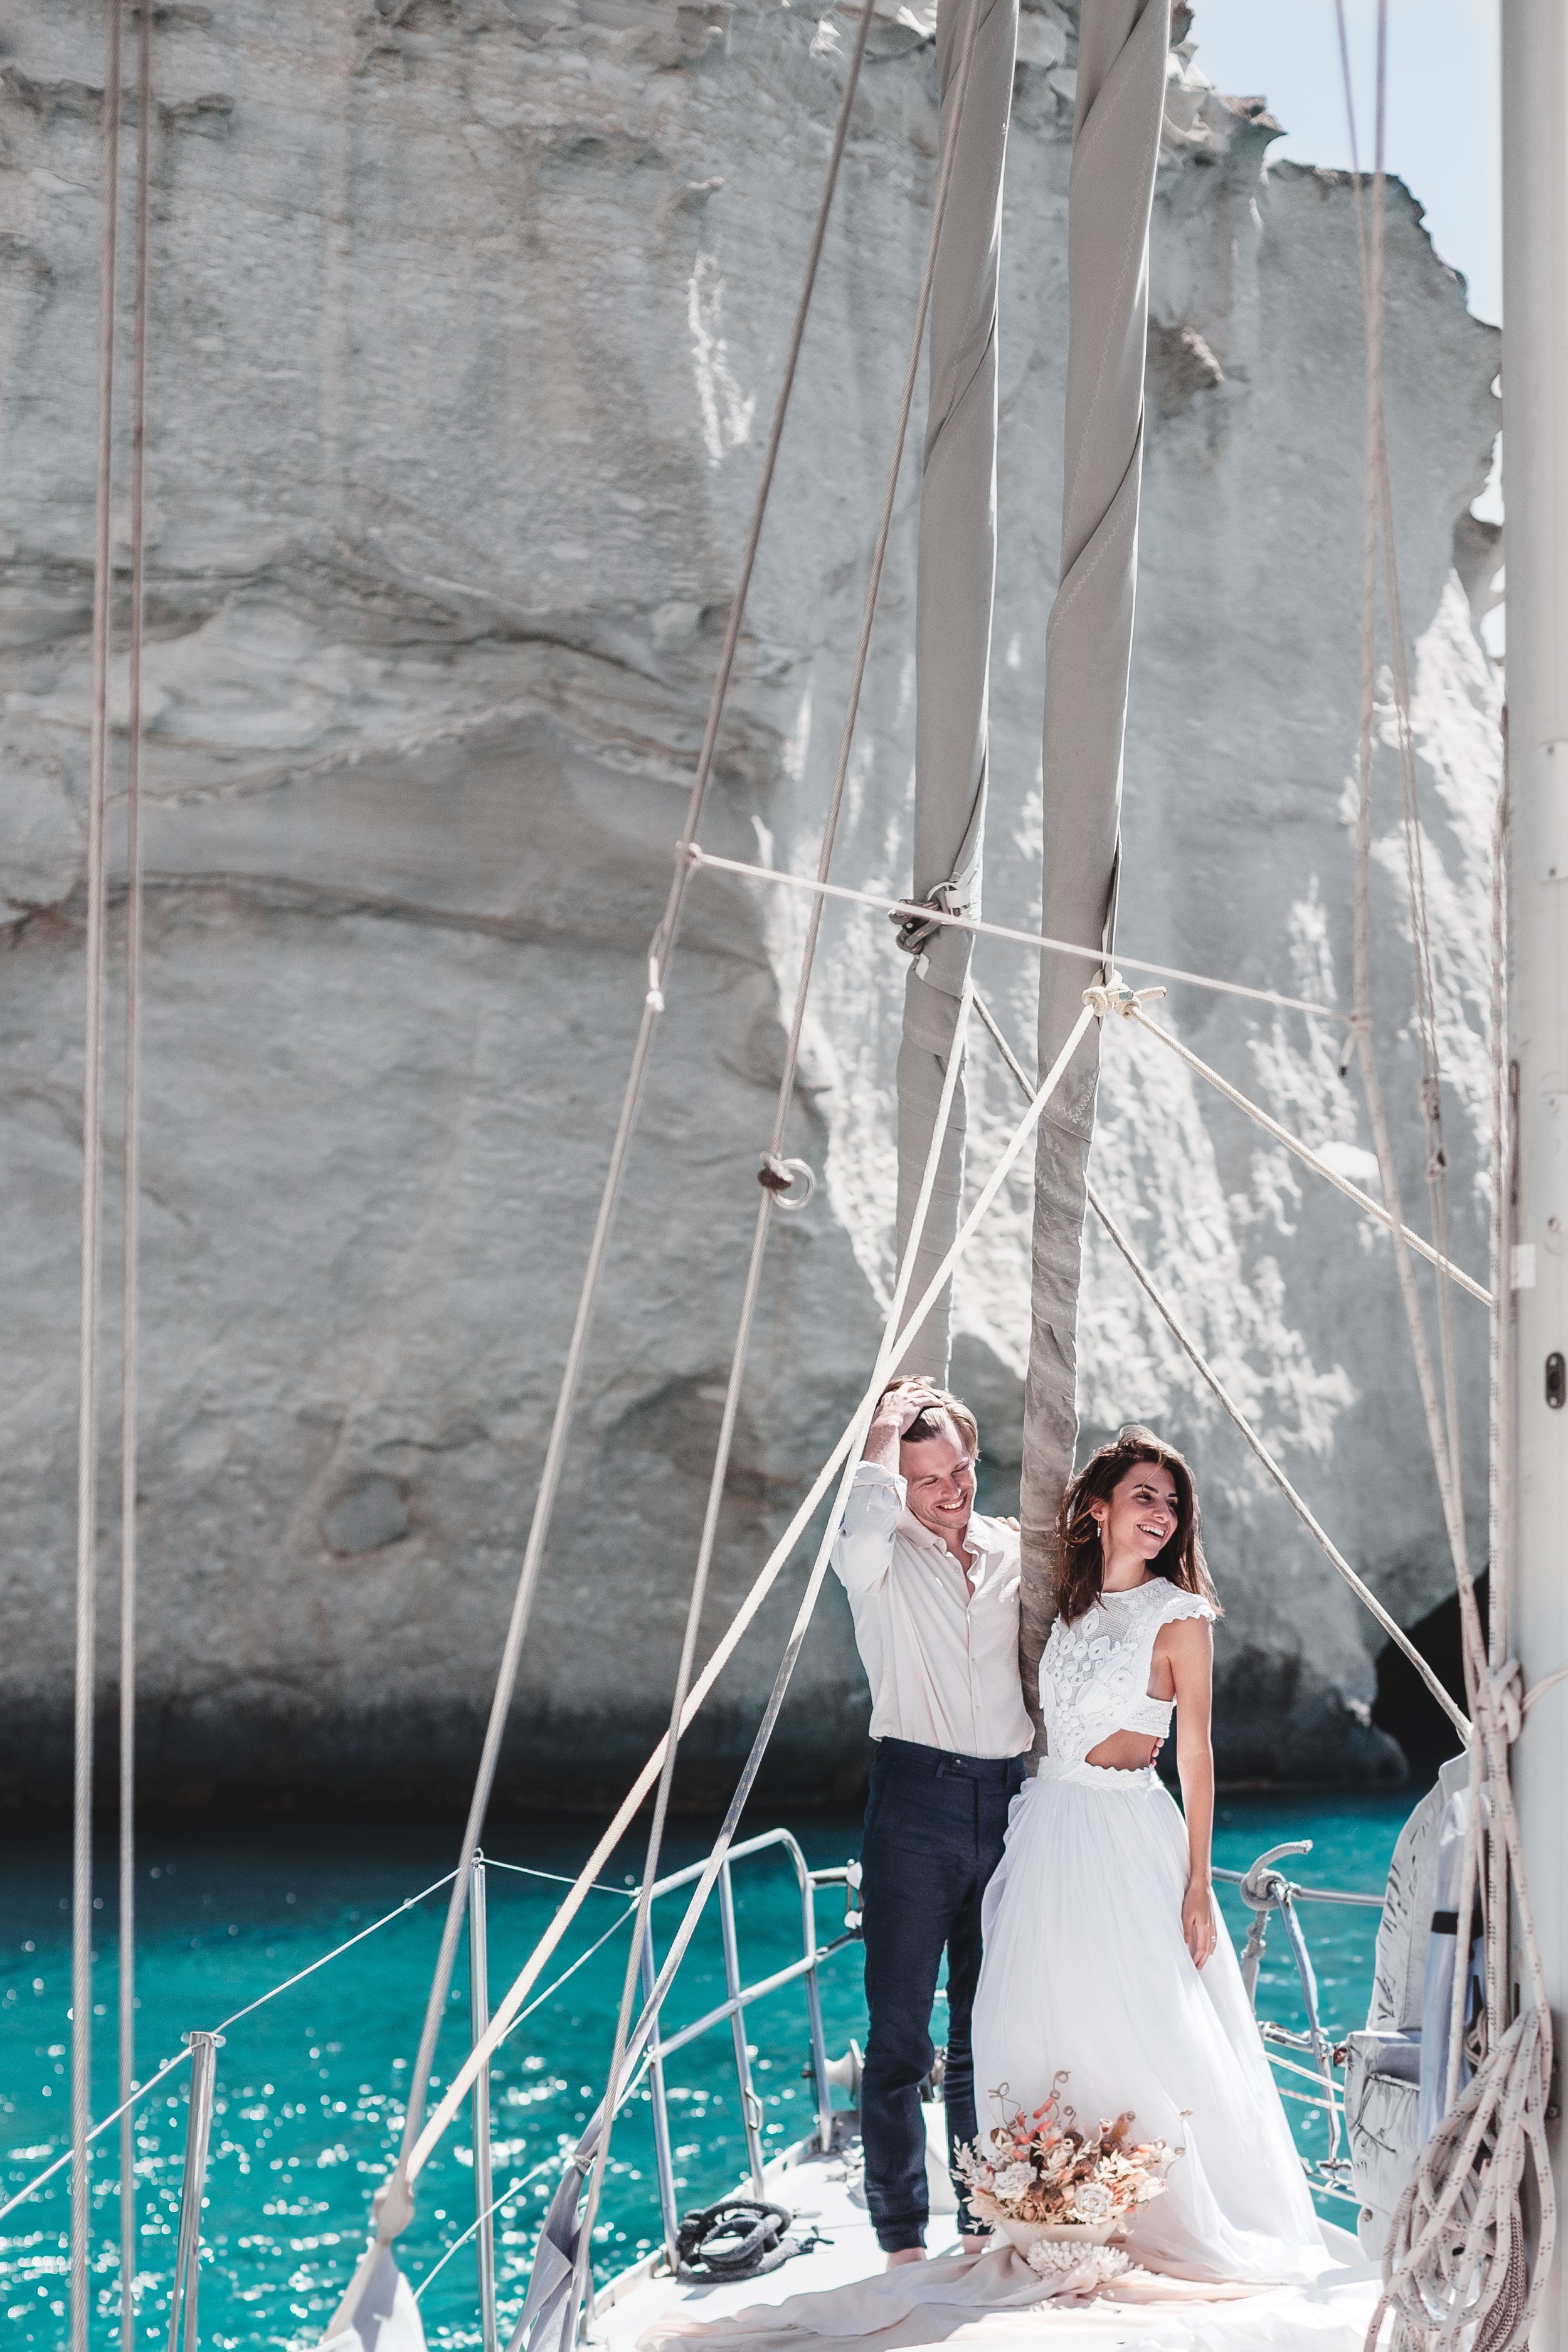 Adventure elopement on a yacht at Kleftiko in Milos, Greece